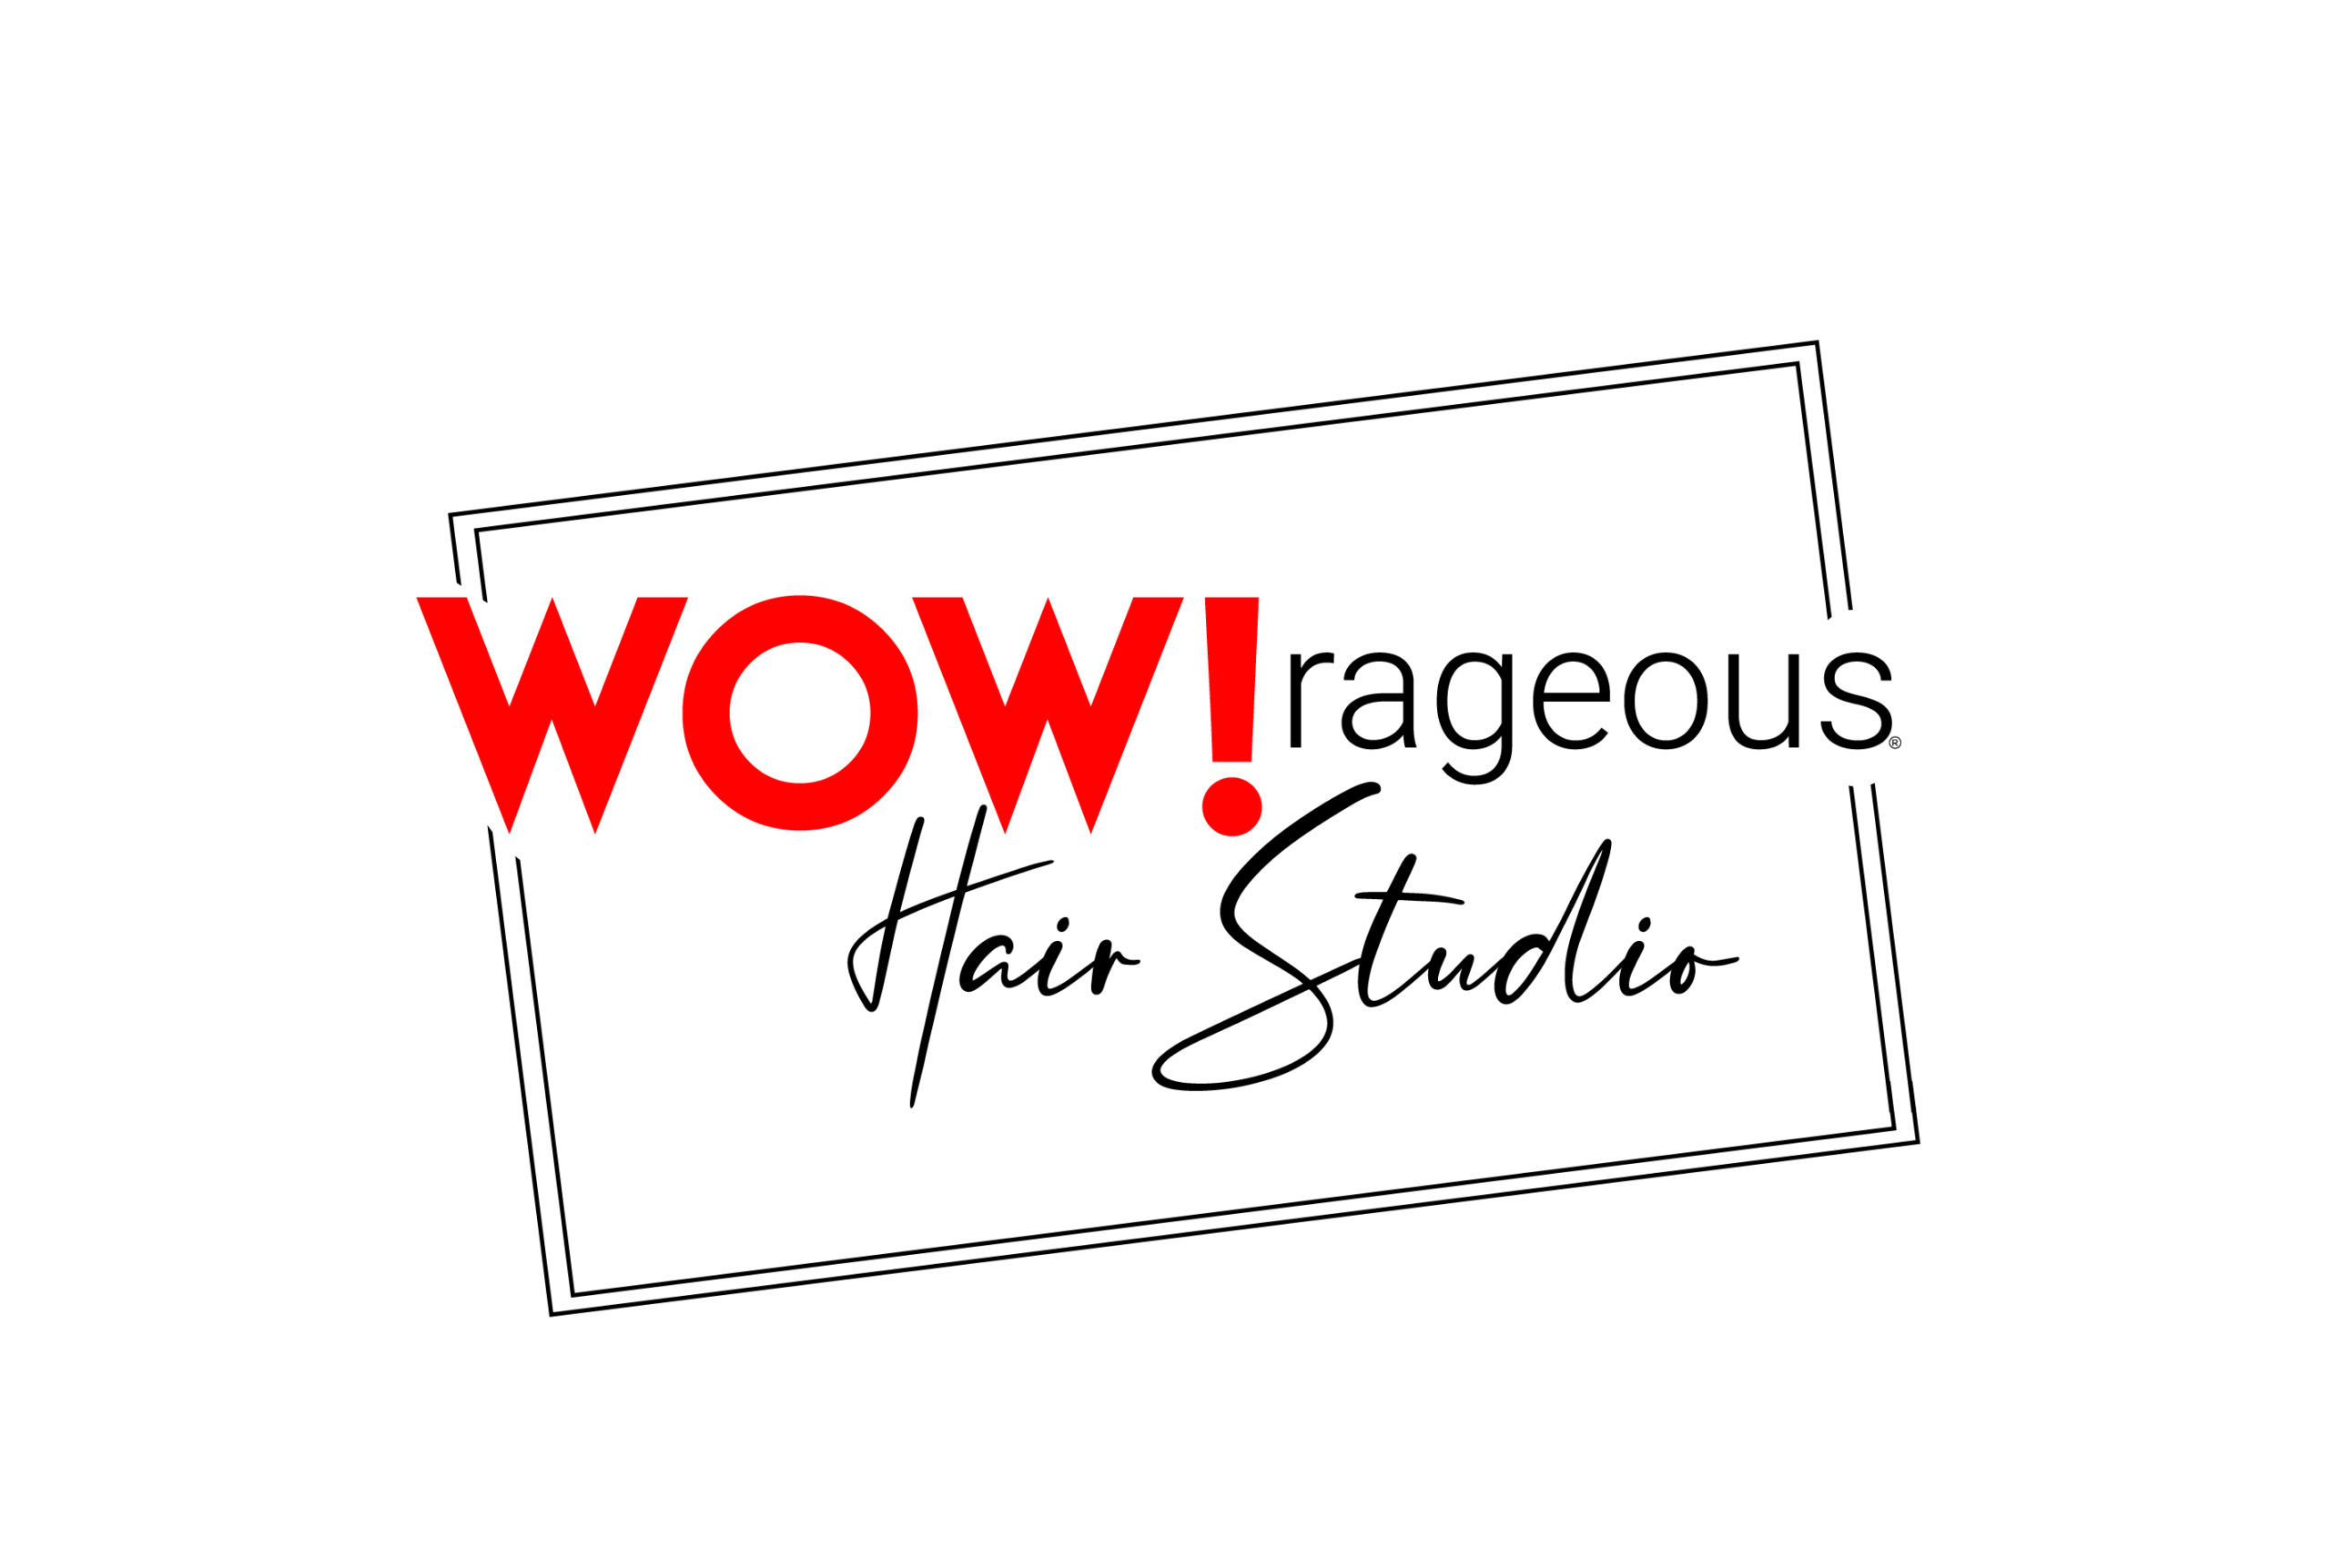 WOW!rageous Hair Studio